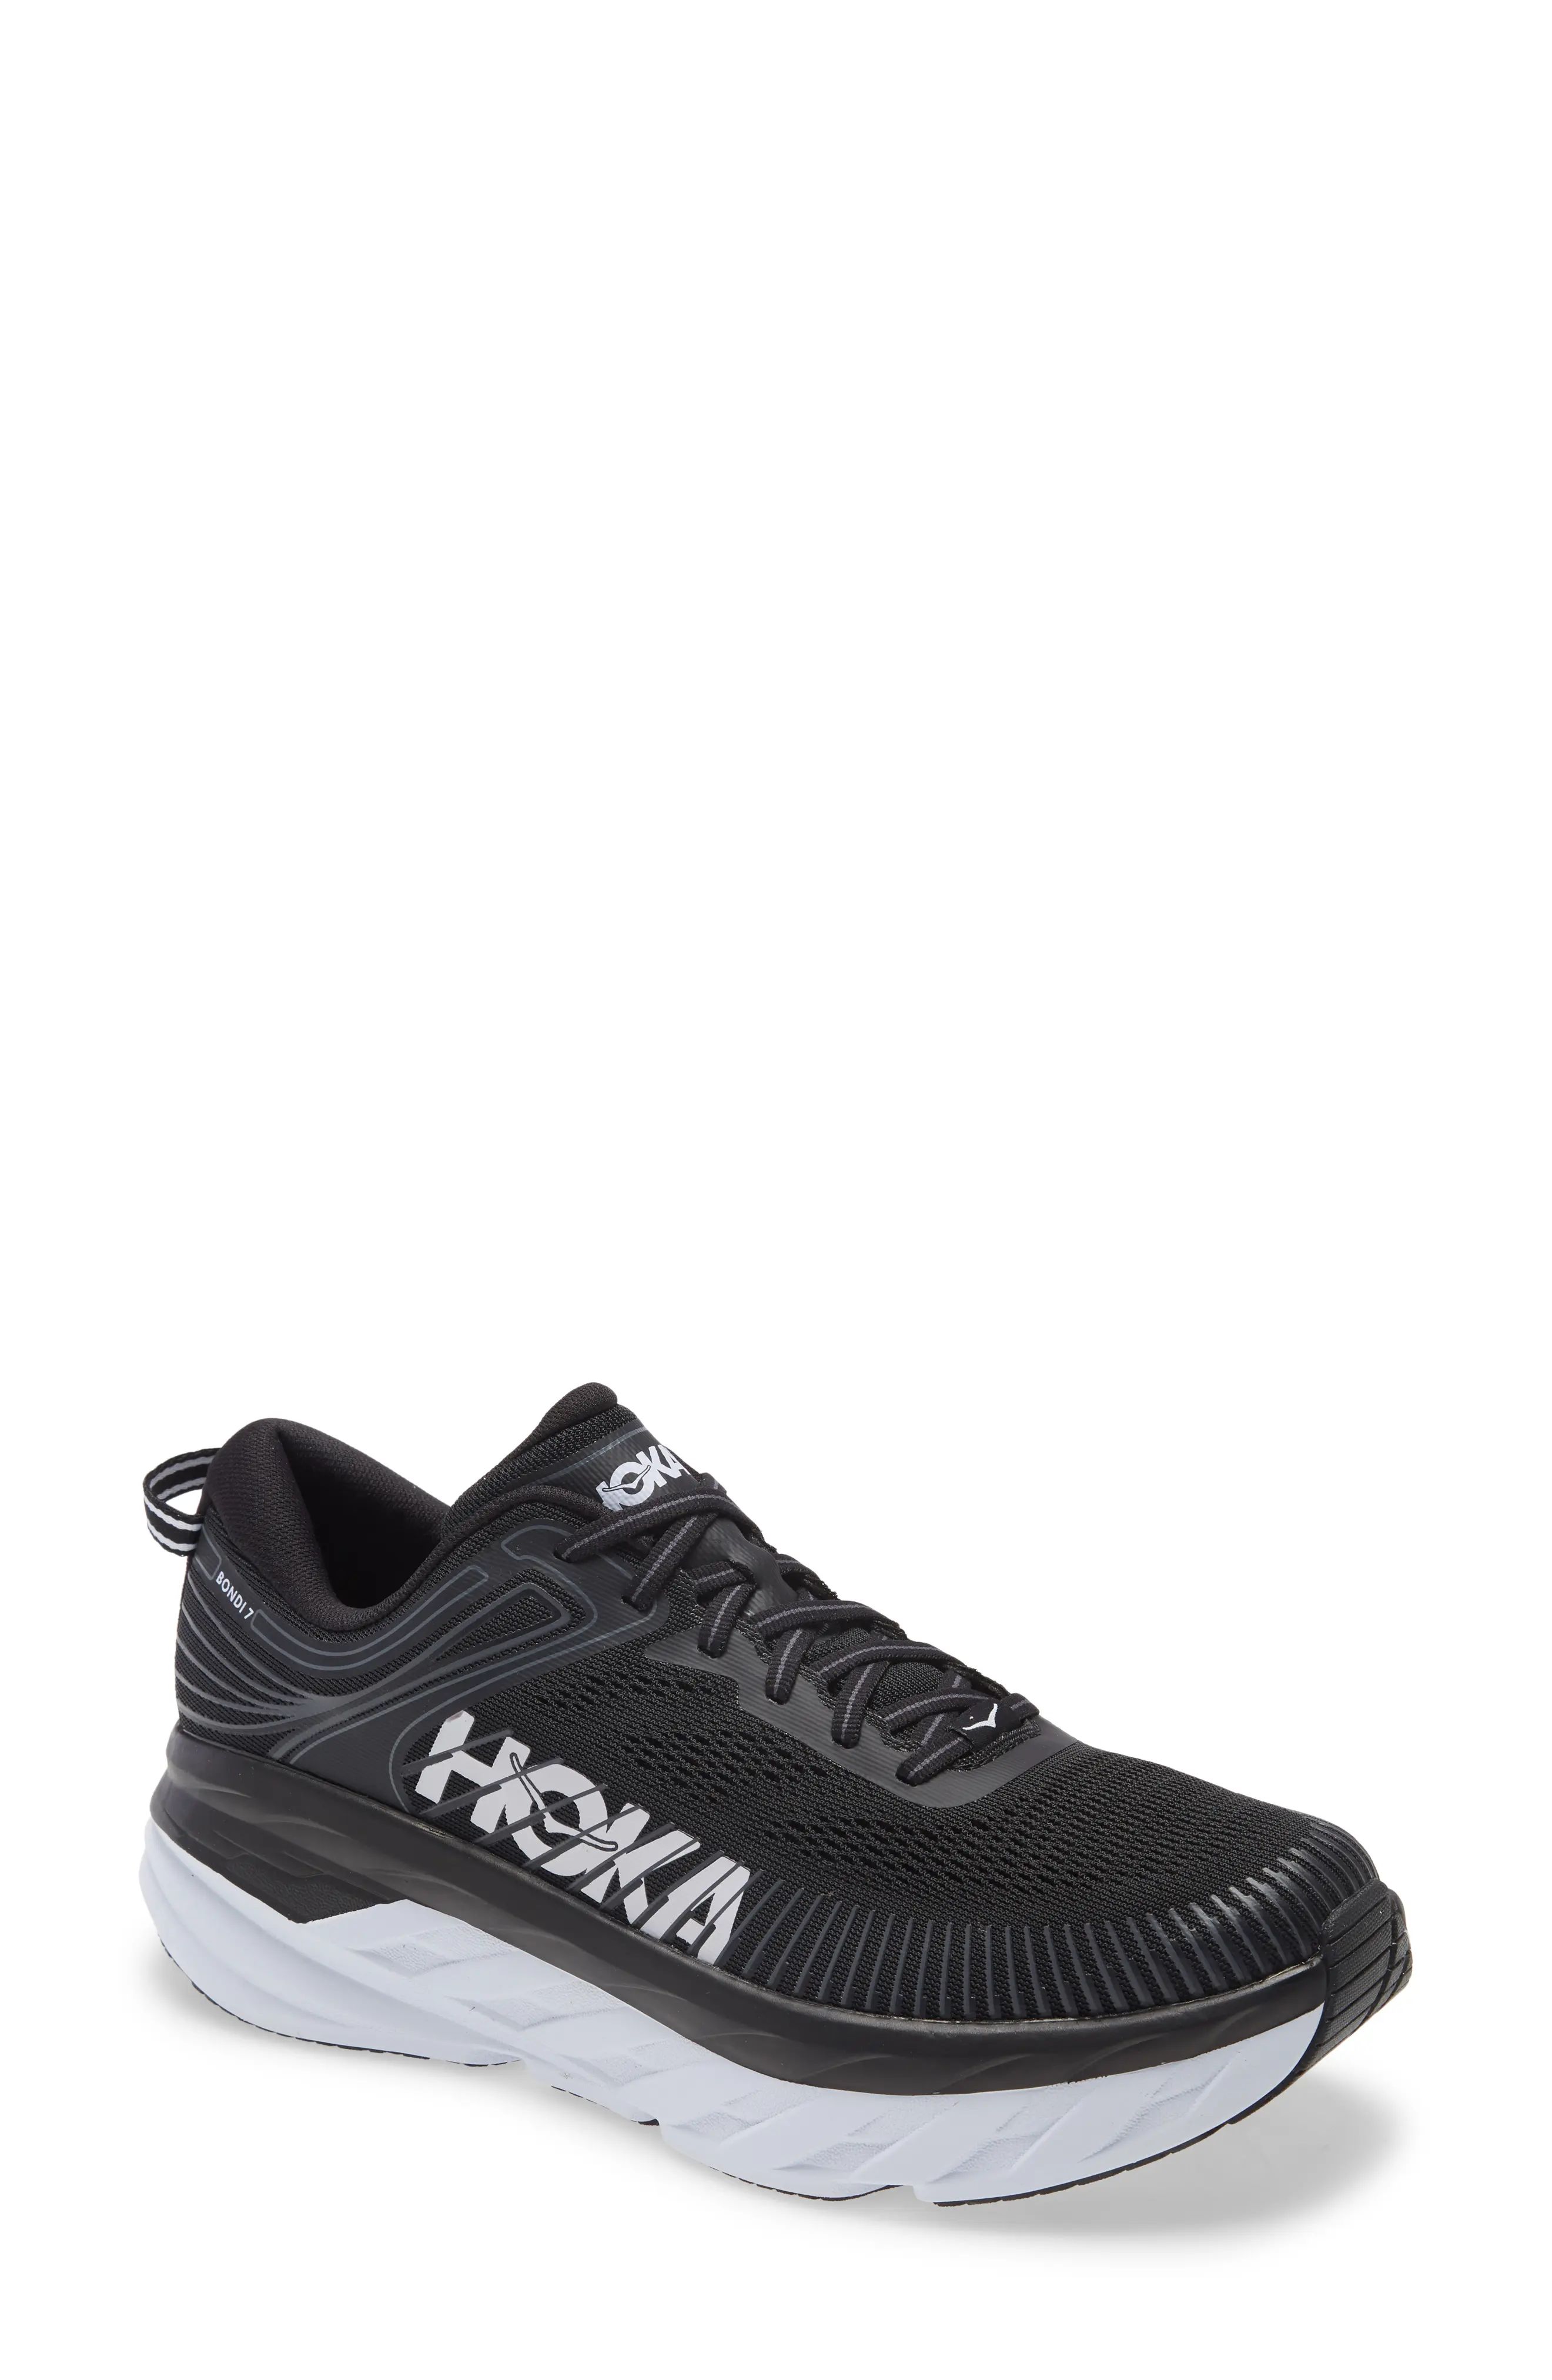 HOKA ONE ONE Bondi 7 Running Shoe, Size 6 in Black/White at Nordstrom | Nordstrom